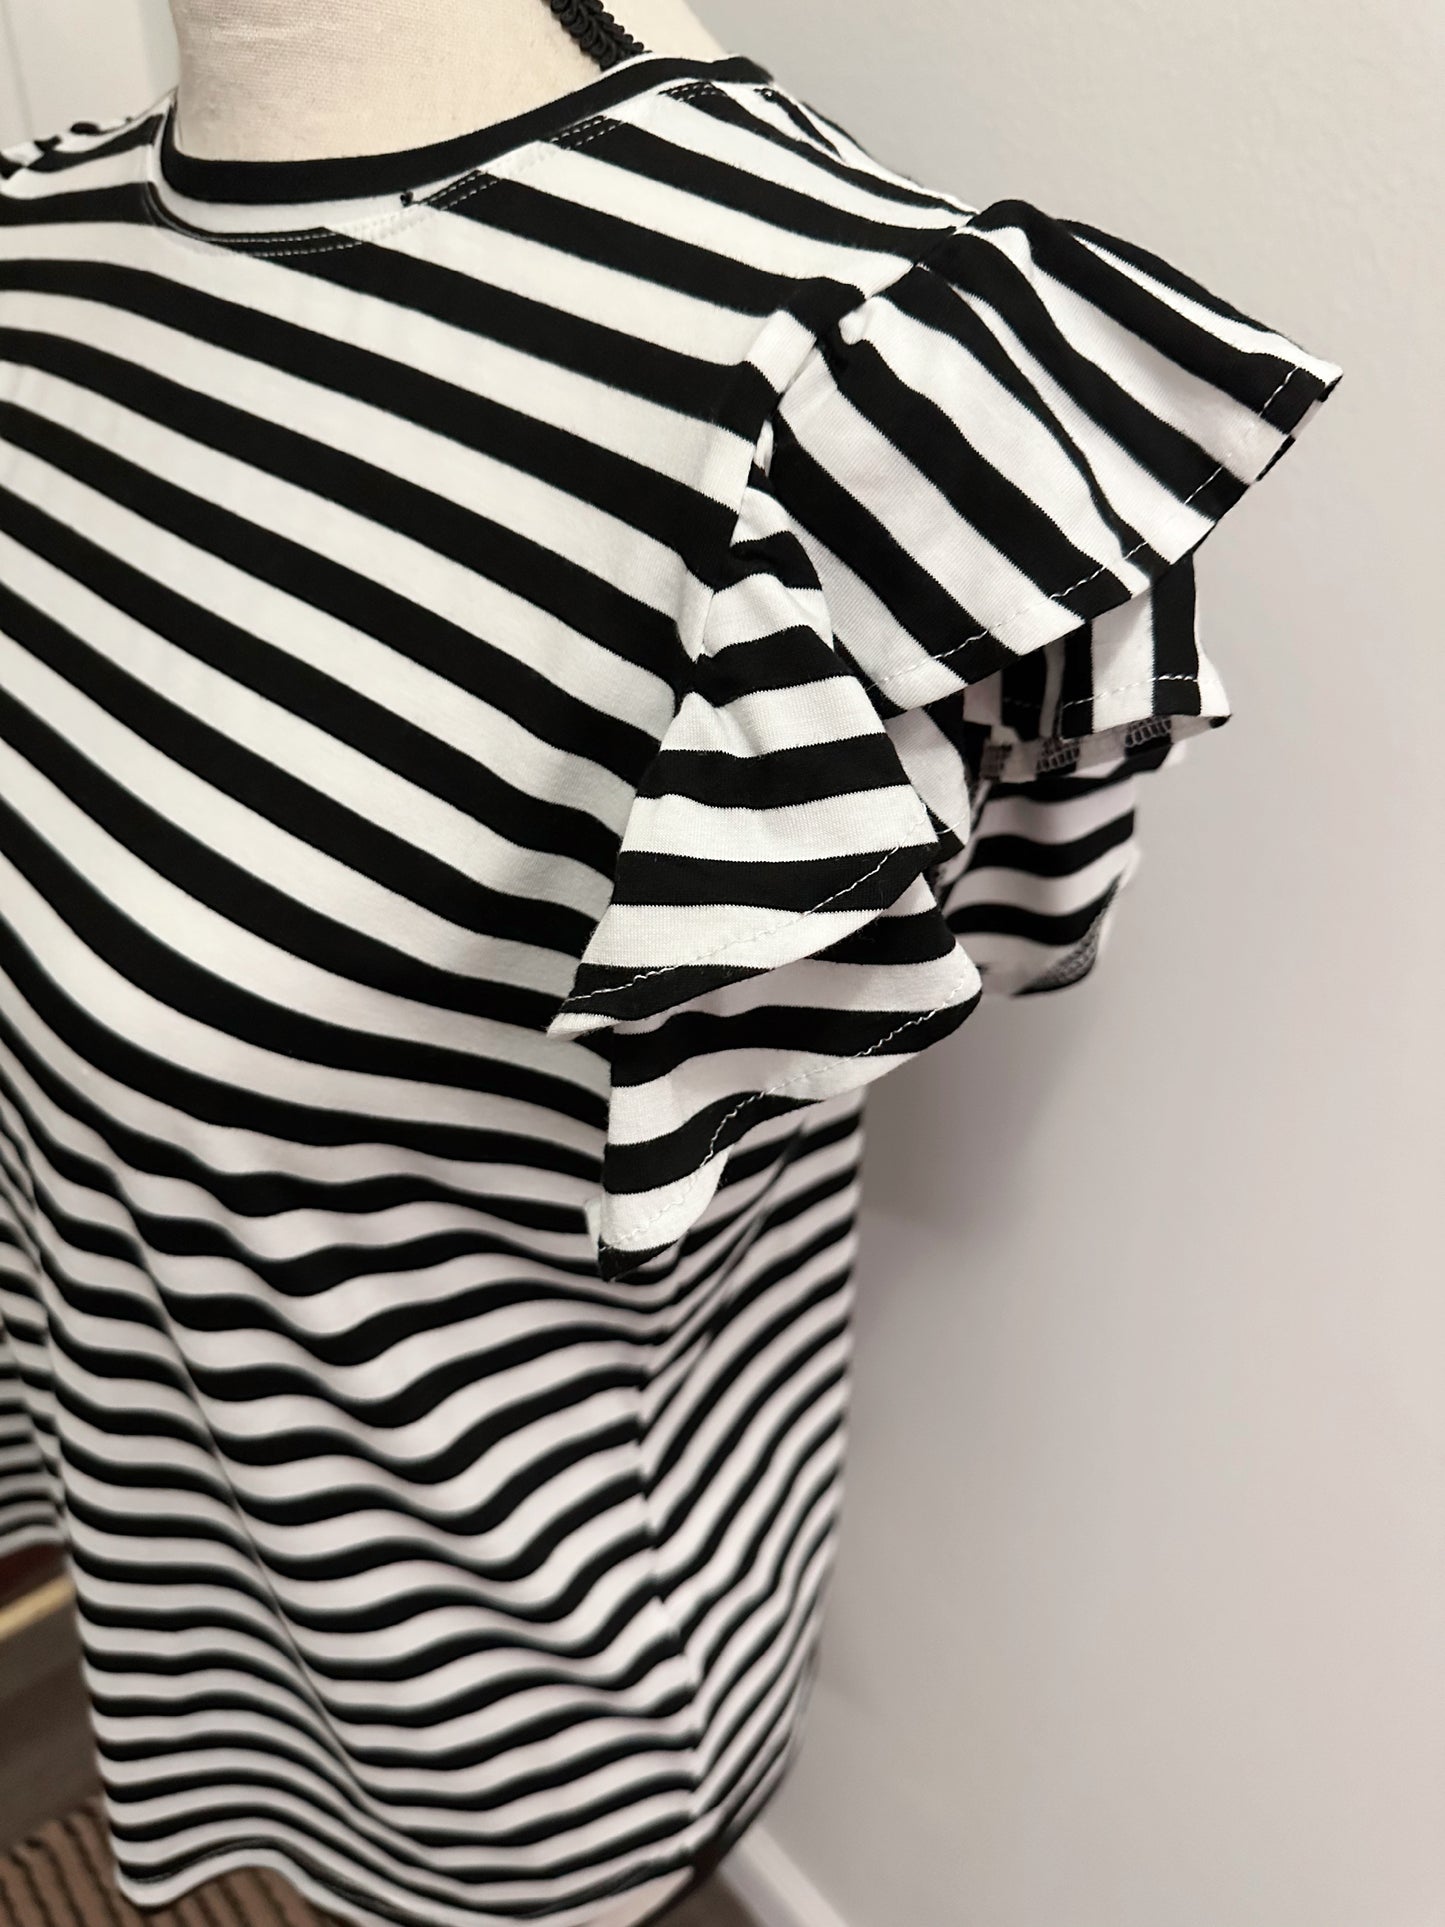 The Black & White Stripes Blouse